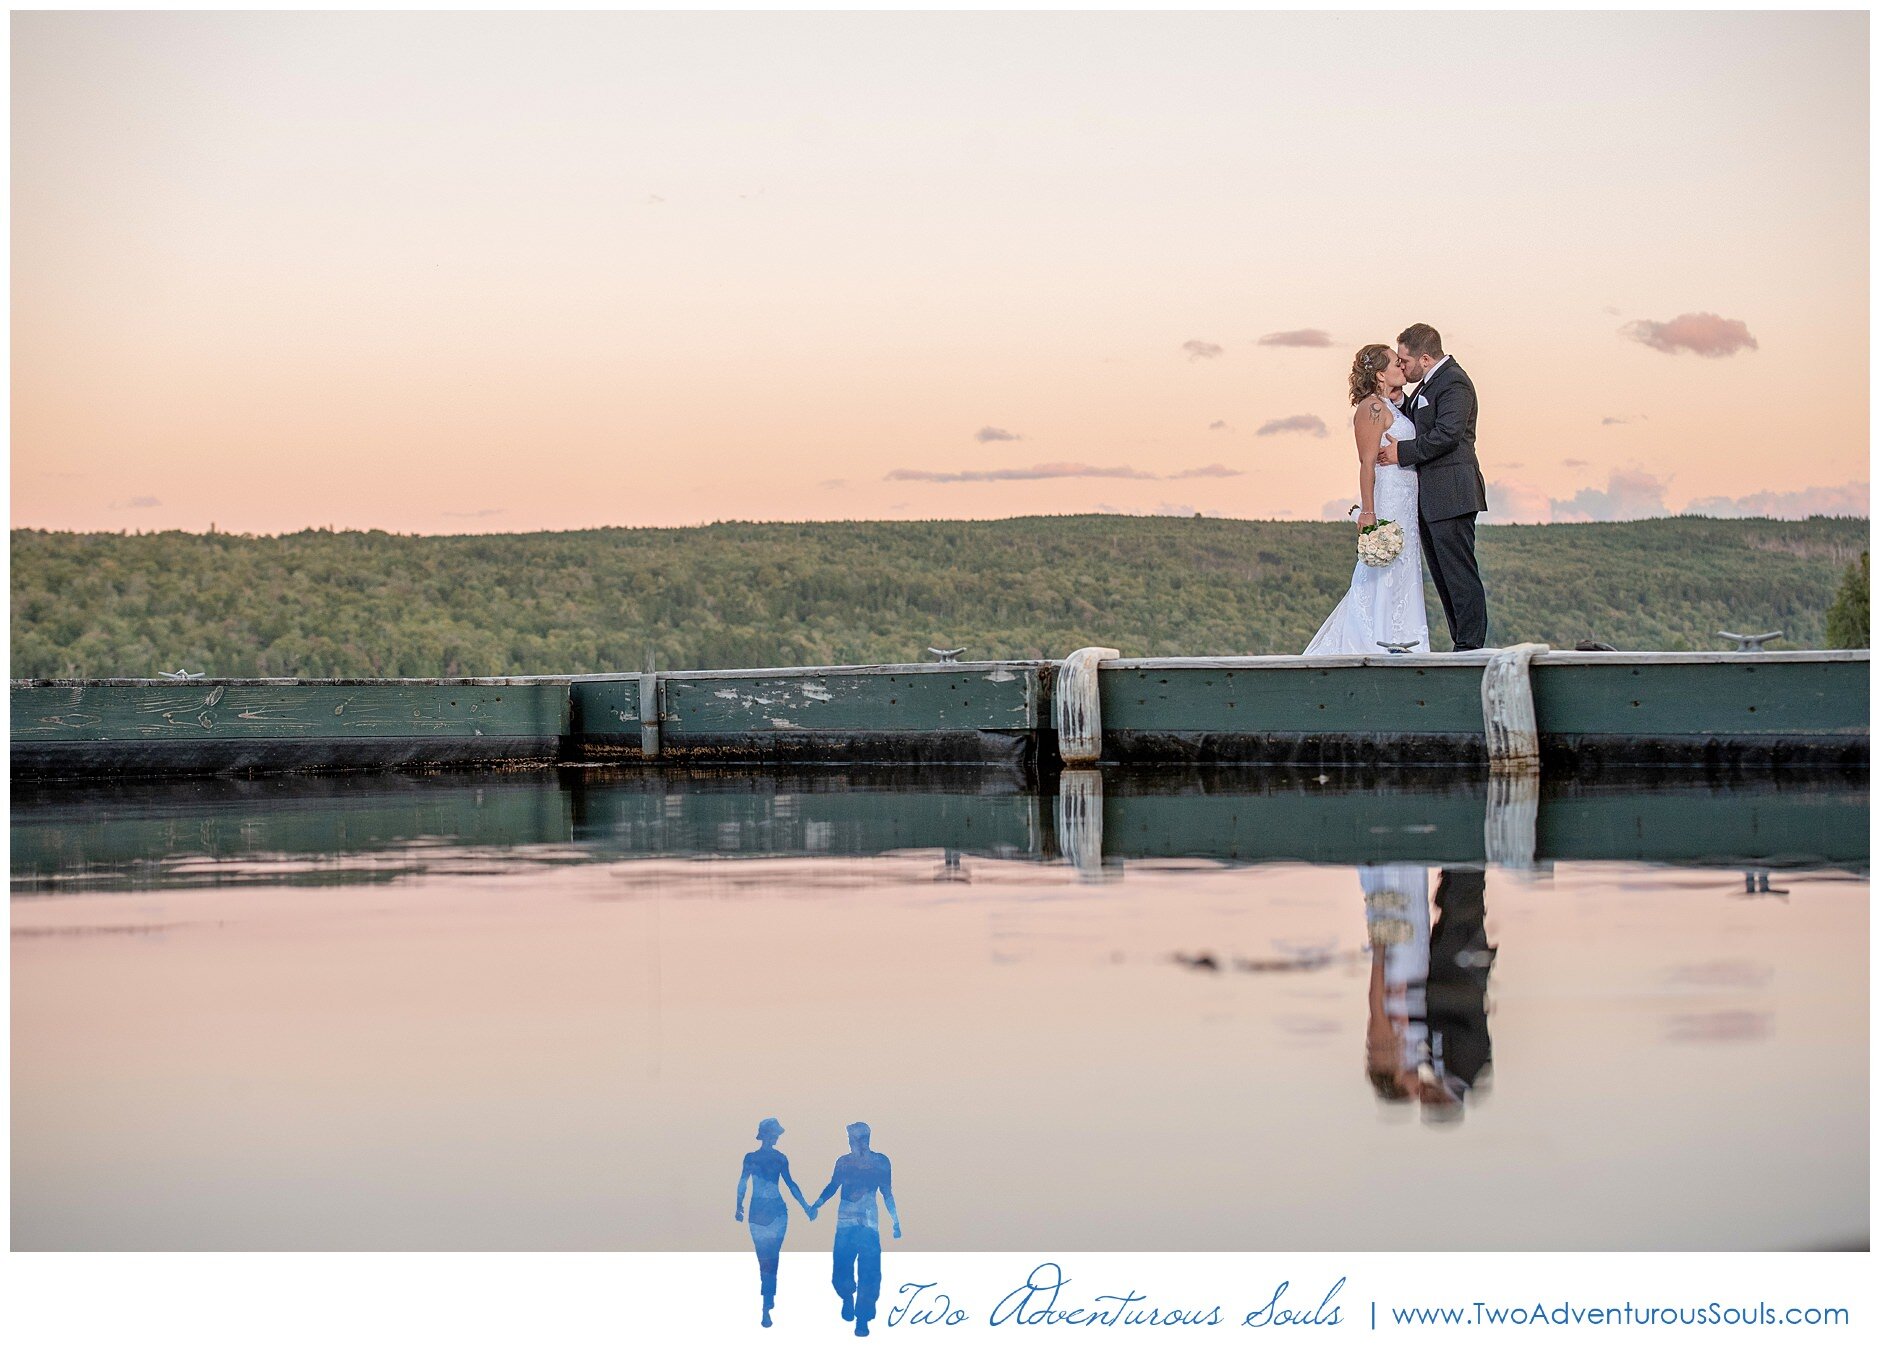 Lake Parlin Lodge Wedding Photos, Jackman Maine Wedding Photographers, Two Adventurous Souls - 090520_0040.jpg